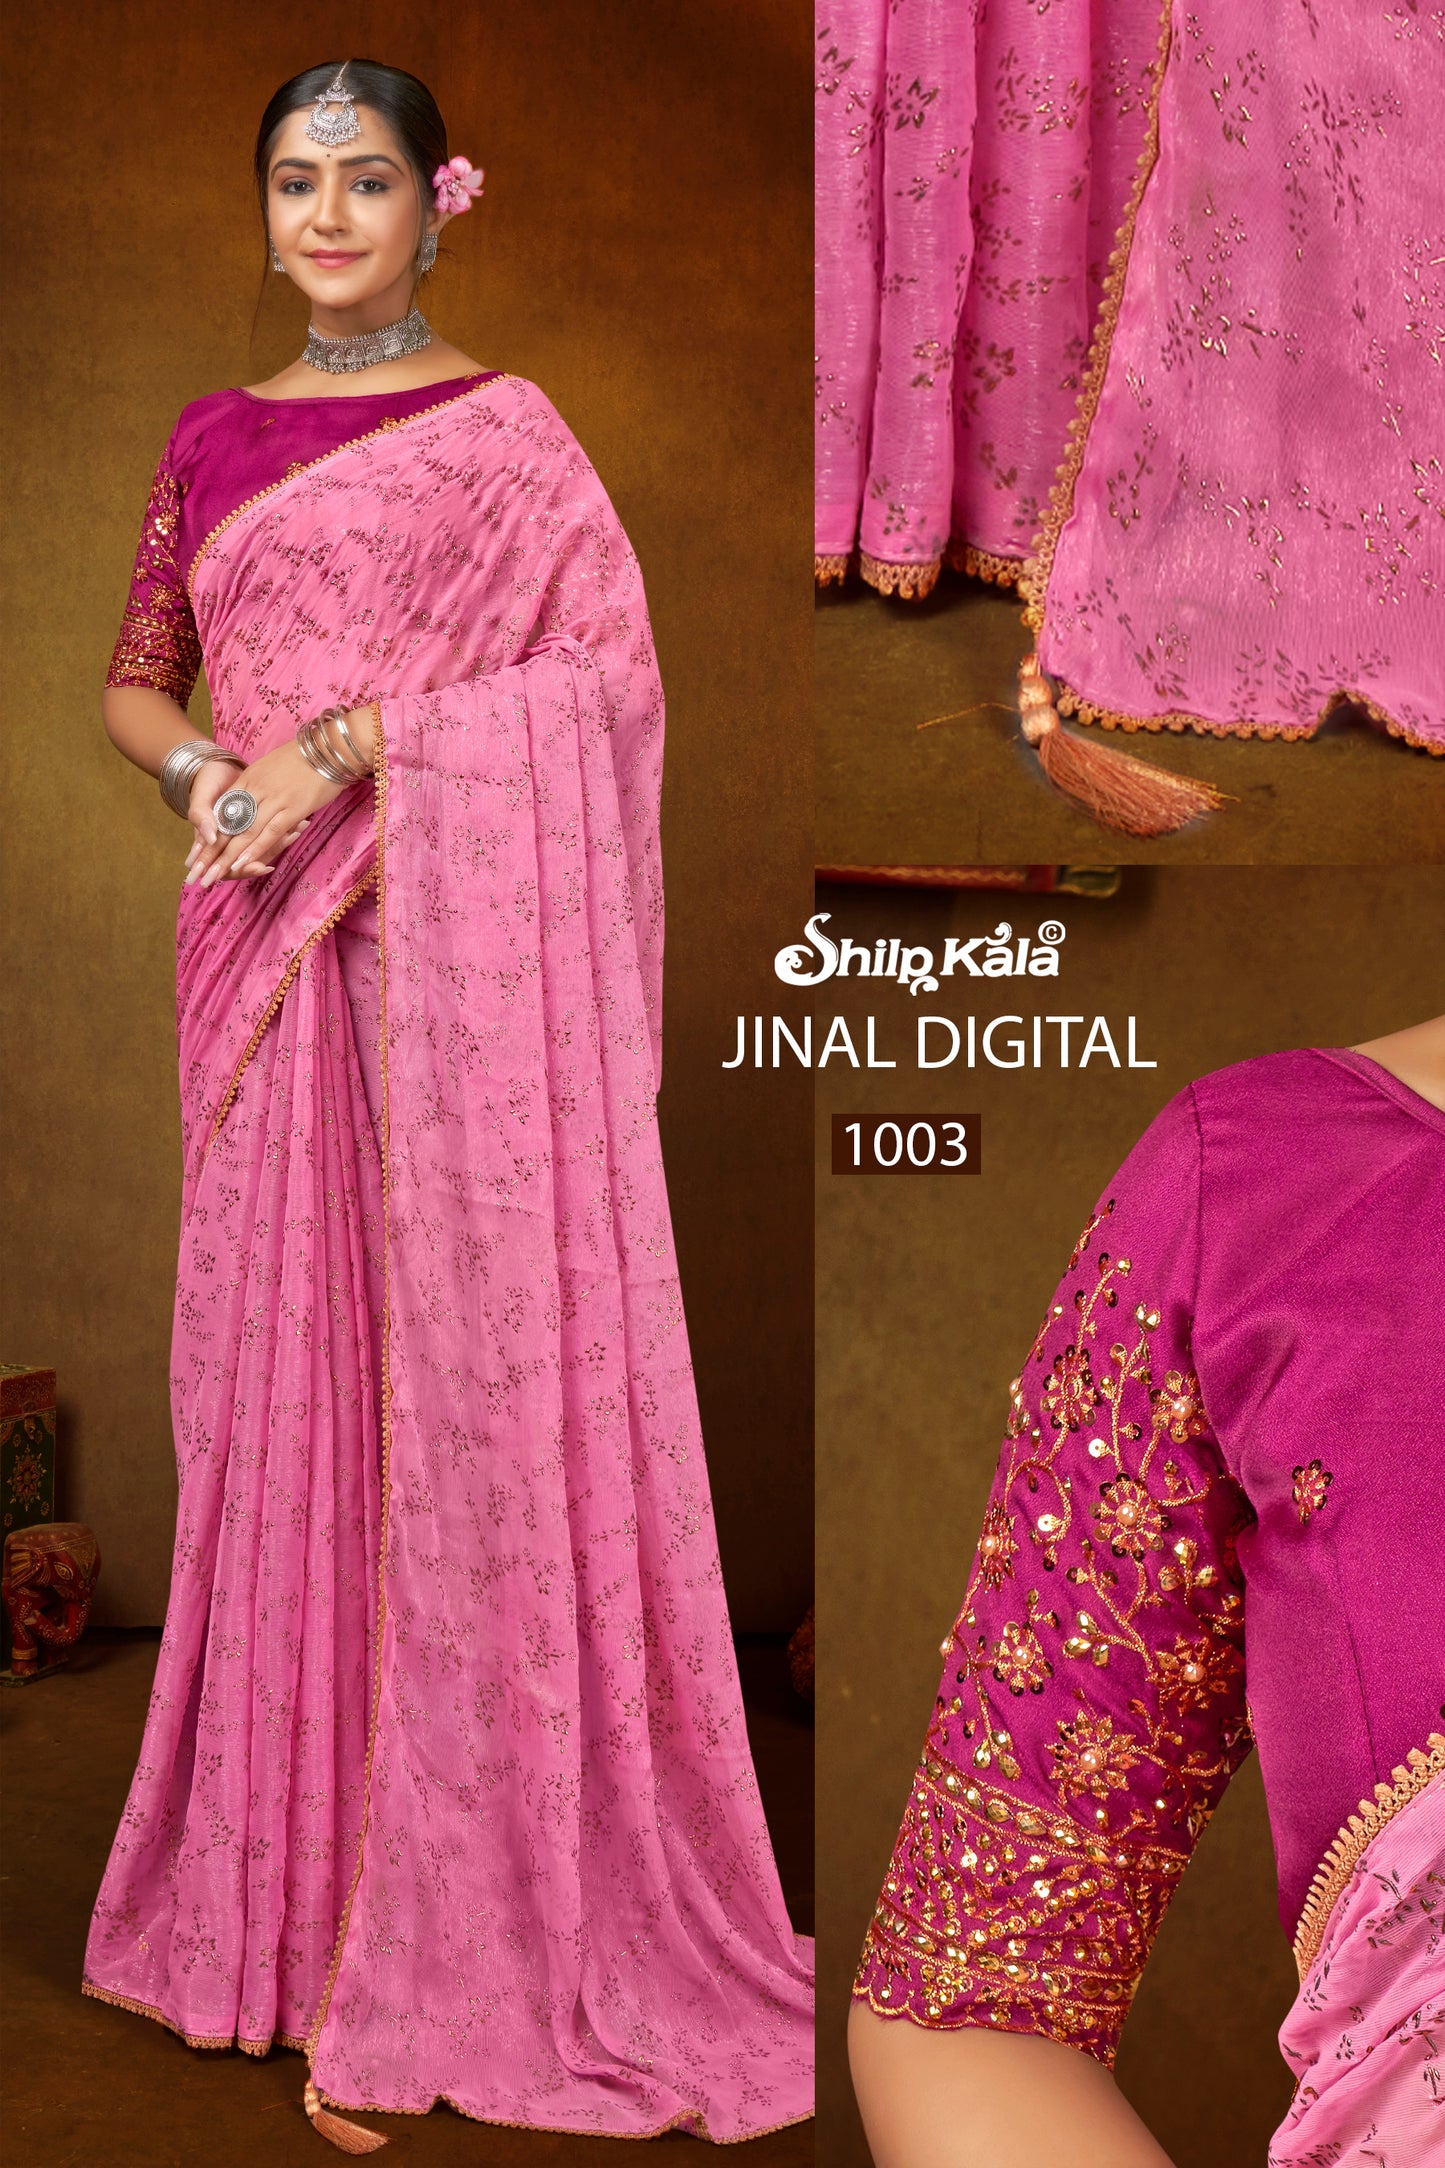 Jinal Multicolor Saree with Jari work Blouse and Contrast Matching